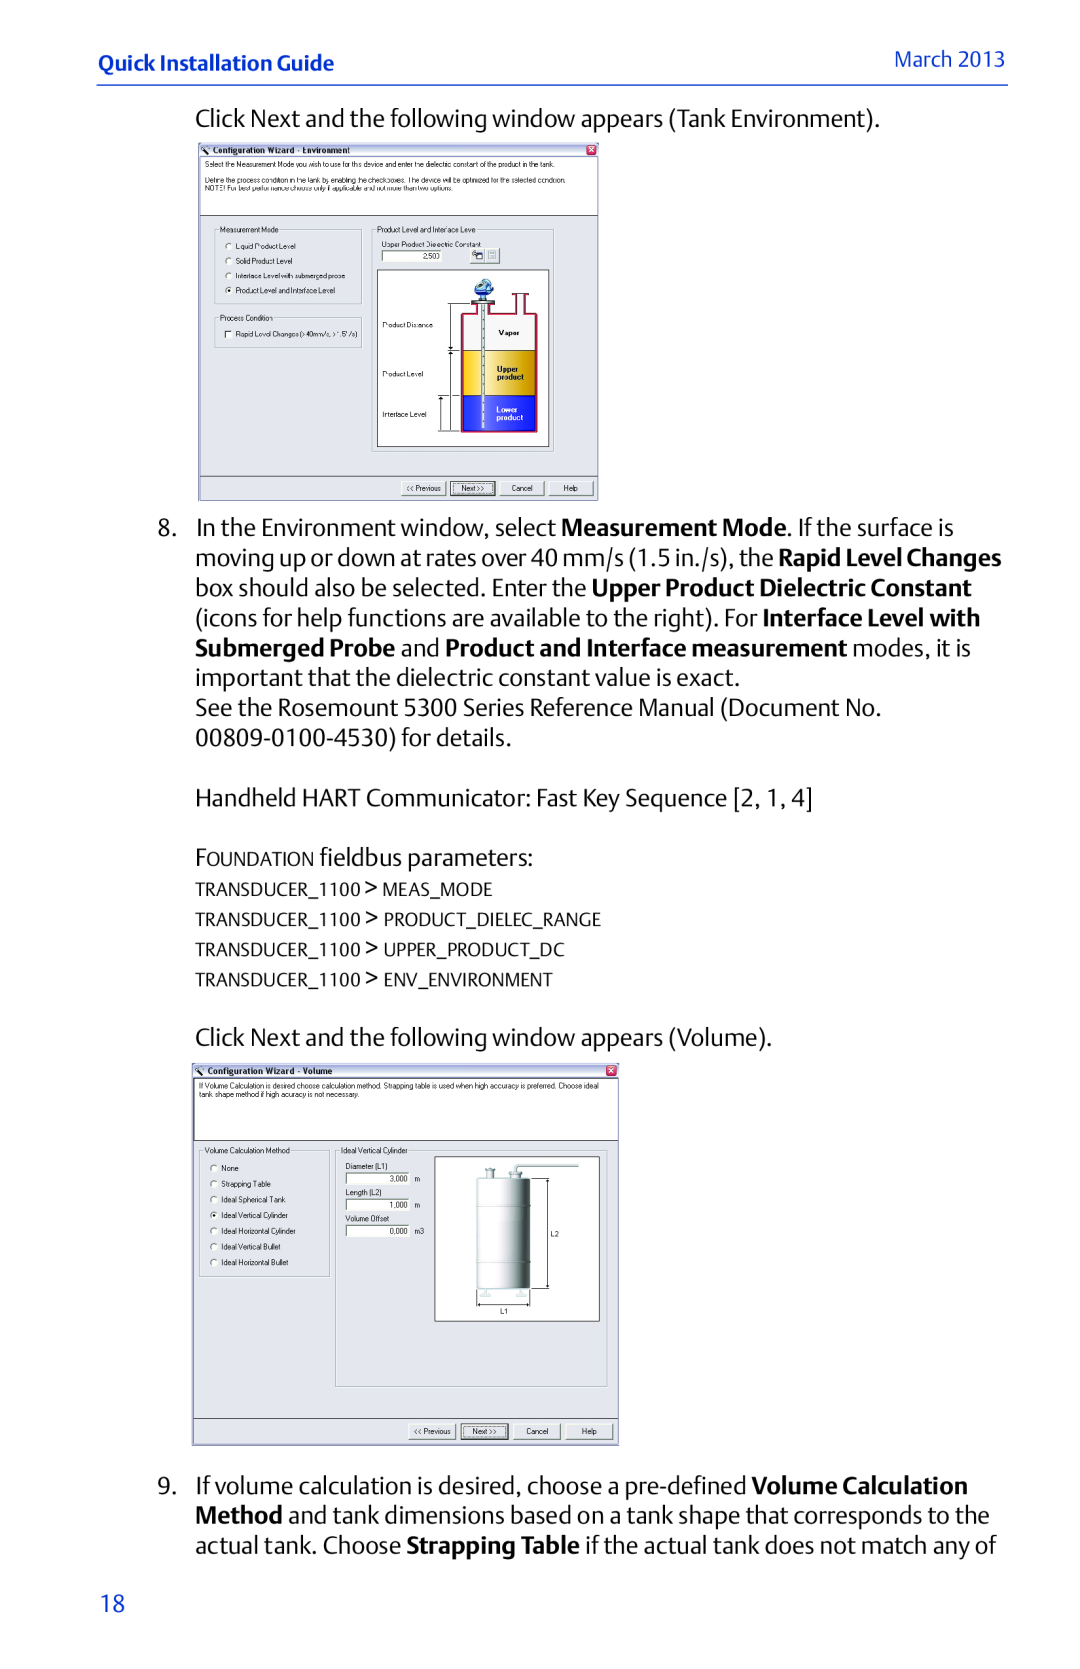 Emerson 00825-0100-4530 Rev EC manual FOUNDATION fieldbus parameters 